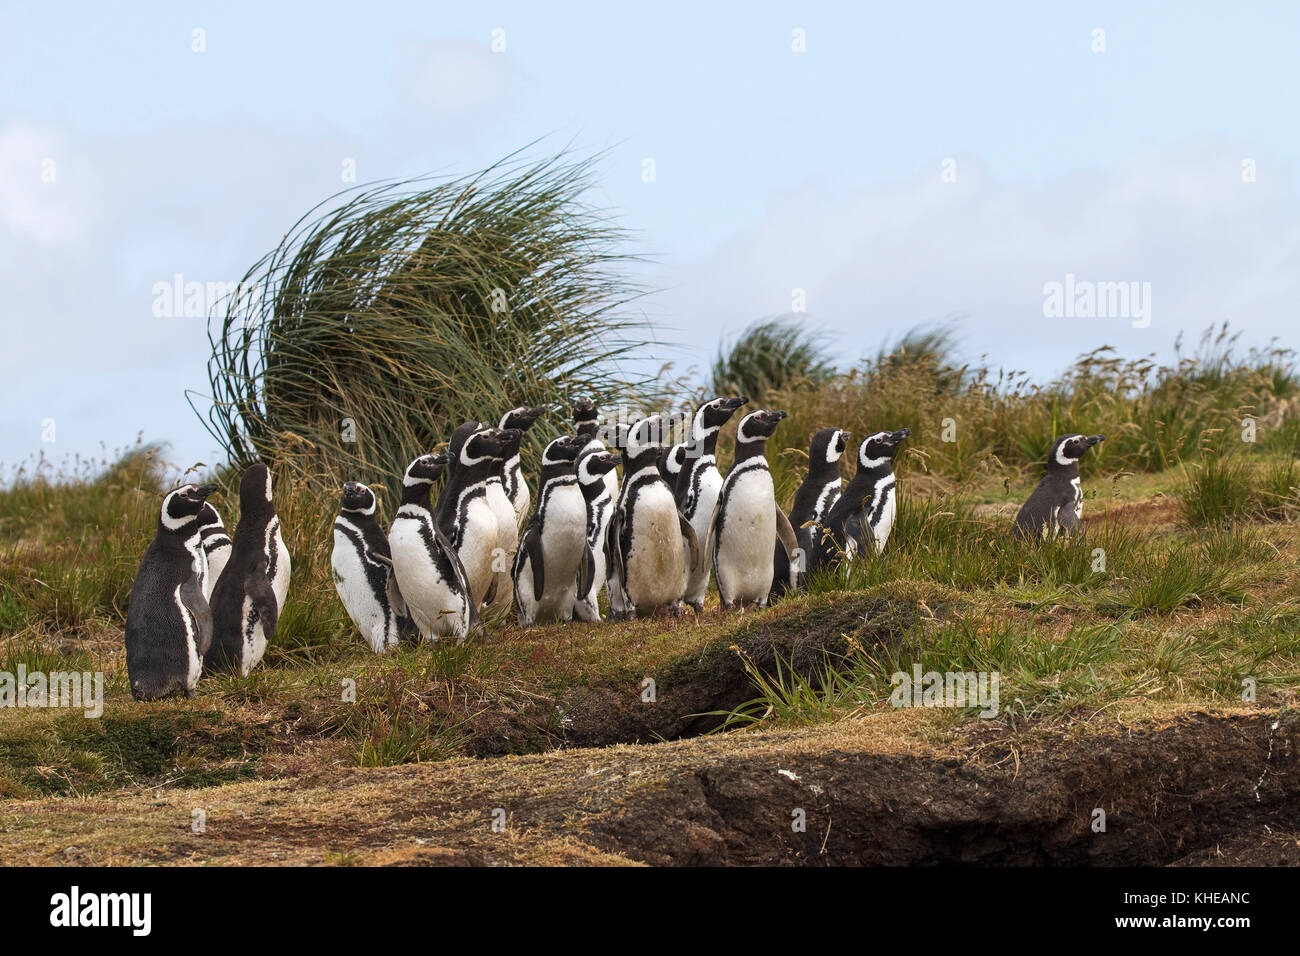 Magellanic penguin Spheniscus magellanicus adults near nesting burrows Sealion Island Falkland Islands British Overseas Territory December 2016 Stock Photo